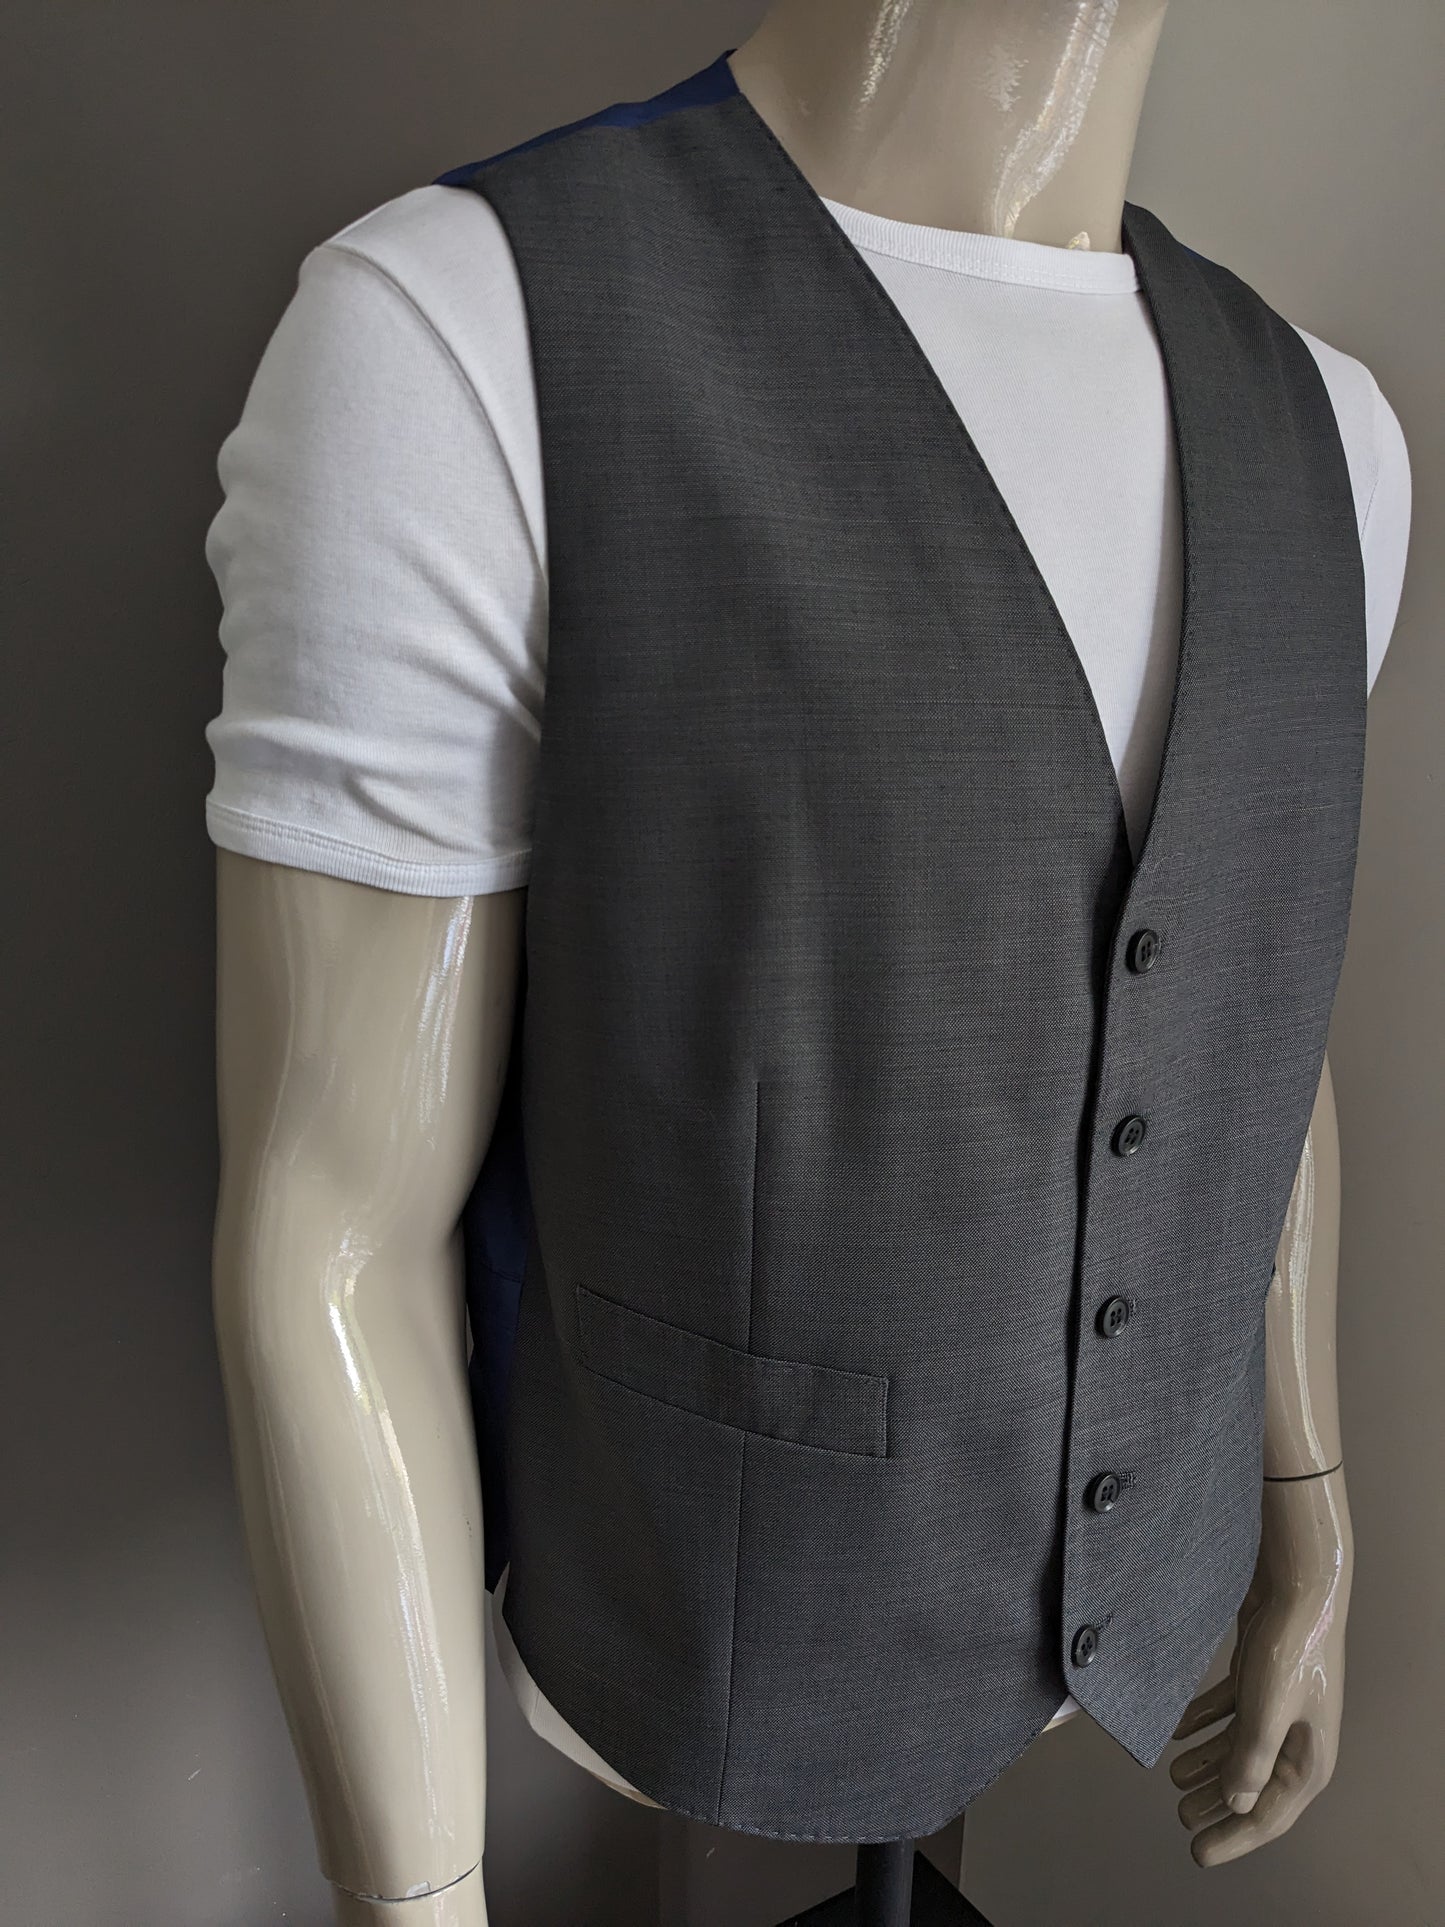 M&S Collection Woolen Wistcoat. Motivo gris. Ajuste a medida. Tamaño L. #326